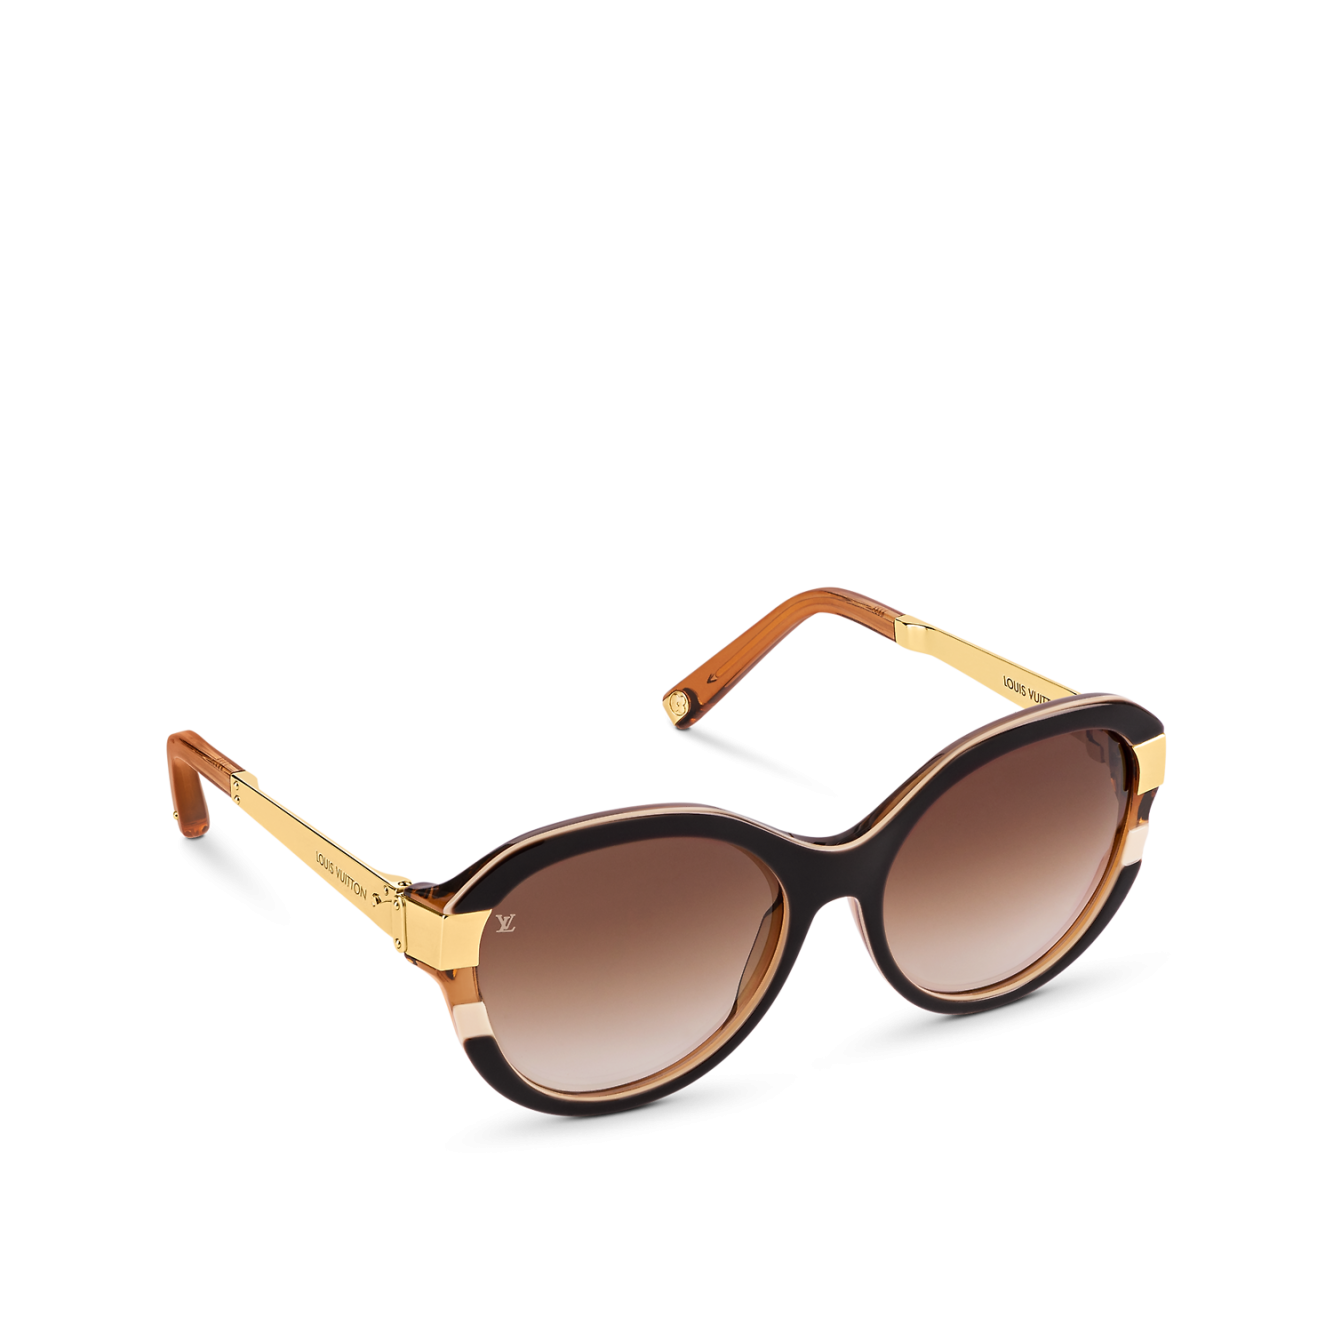 louis vuitton cat eye sunglasses for women